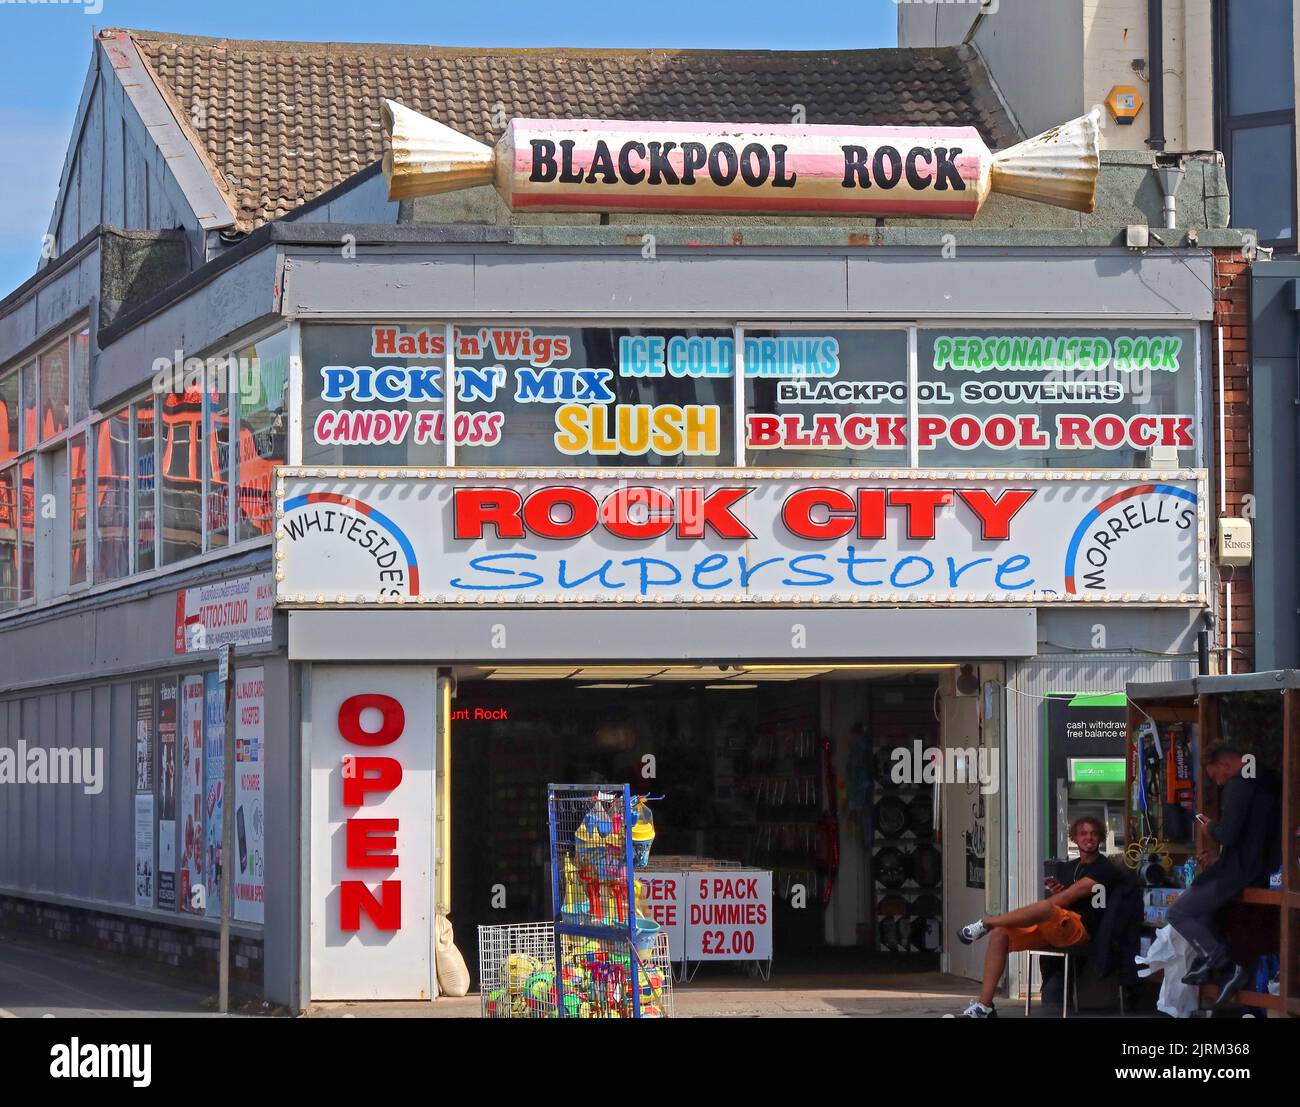 Whitesides Blackpool Rock City superstore, Mint, Peardrop, Aniseed, Fruit, Fizzy Cola, Lancashire, England, UK, FY1 Stock Photo